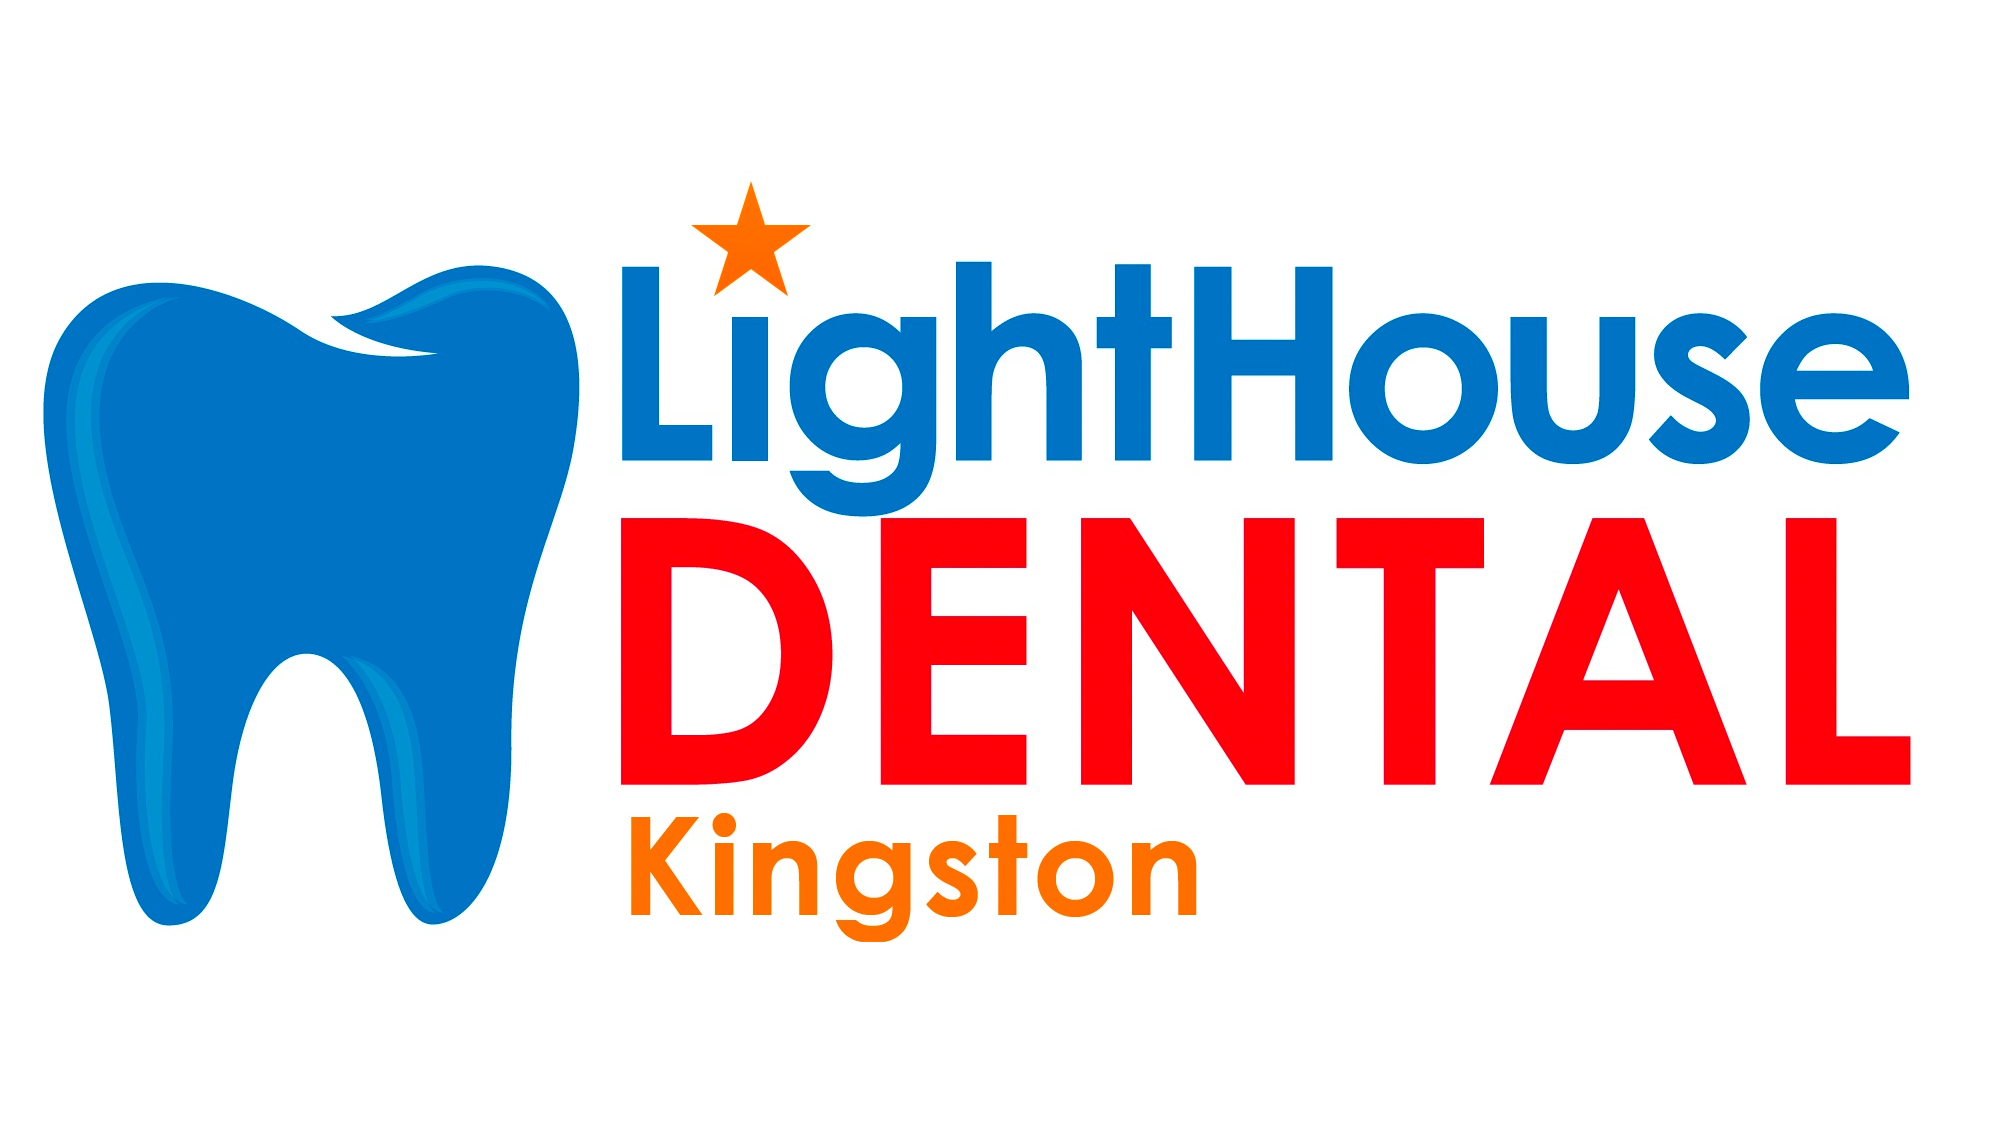 Kingston Dentists LightHouse Dental